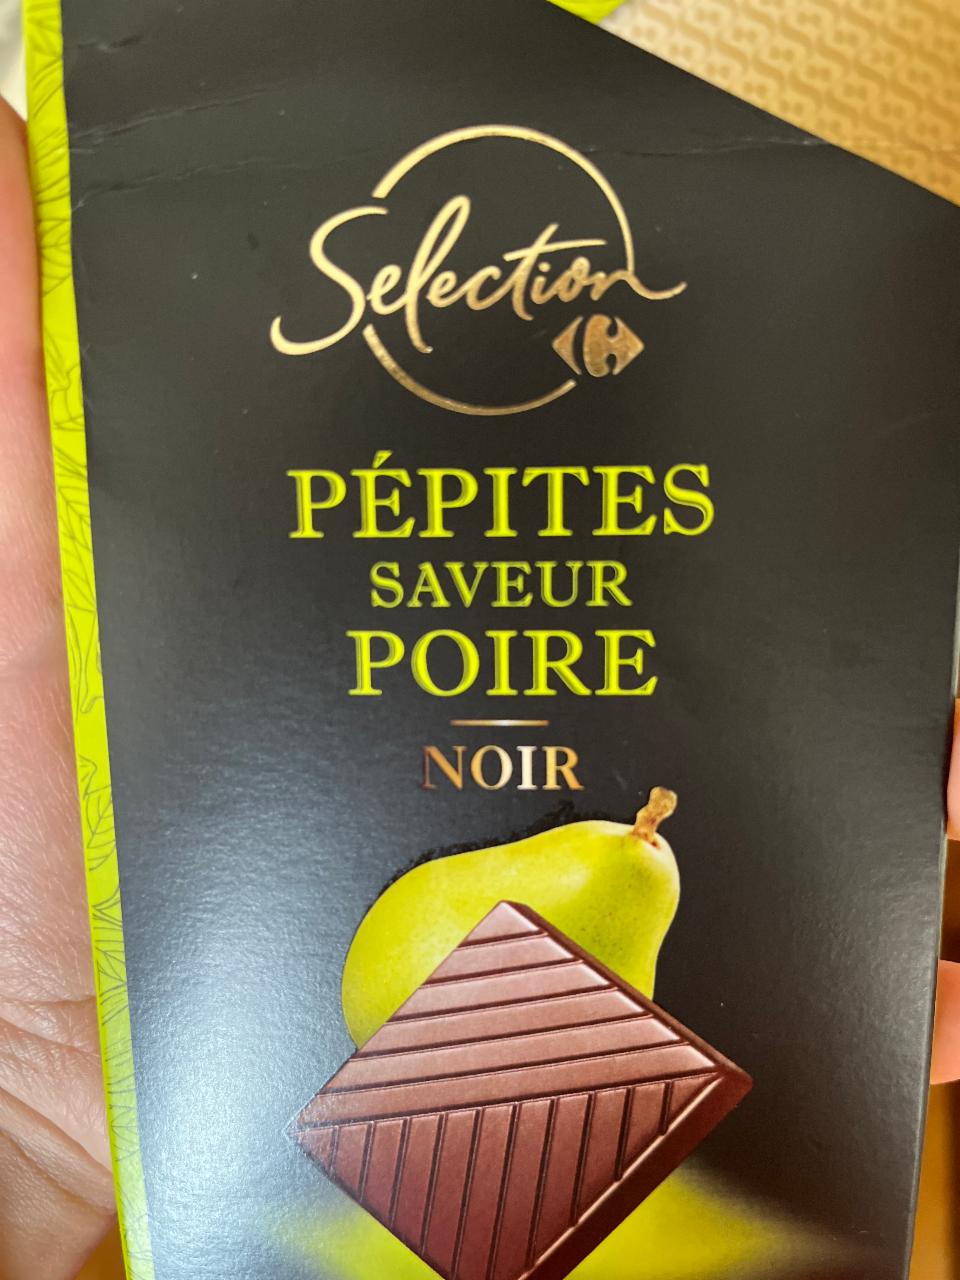 Фото - Шоколад с грушей Carrefour Selection